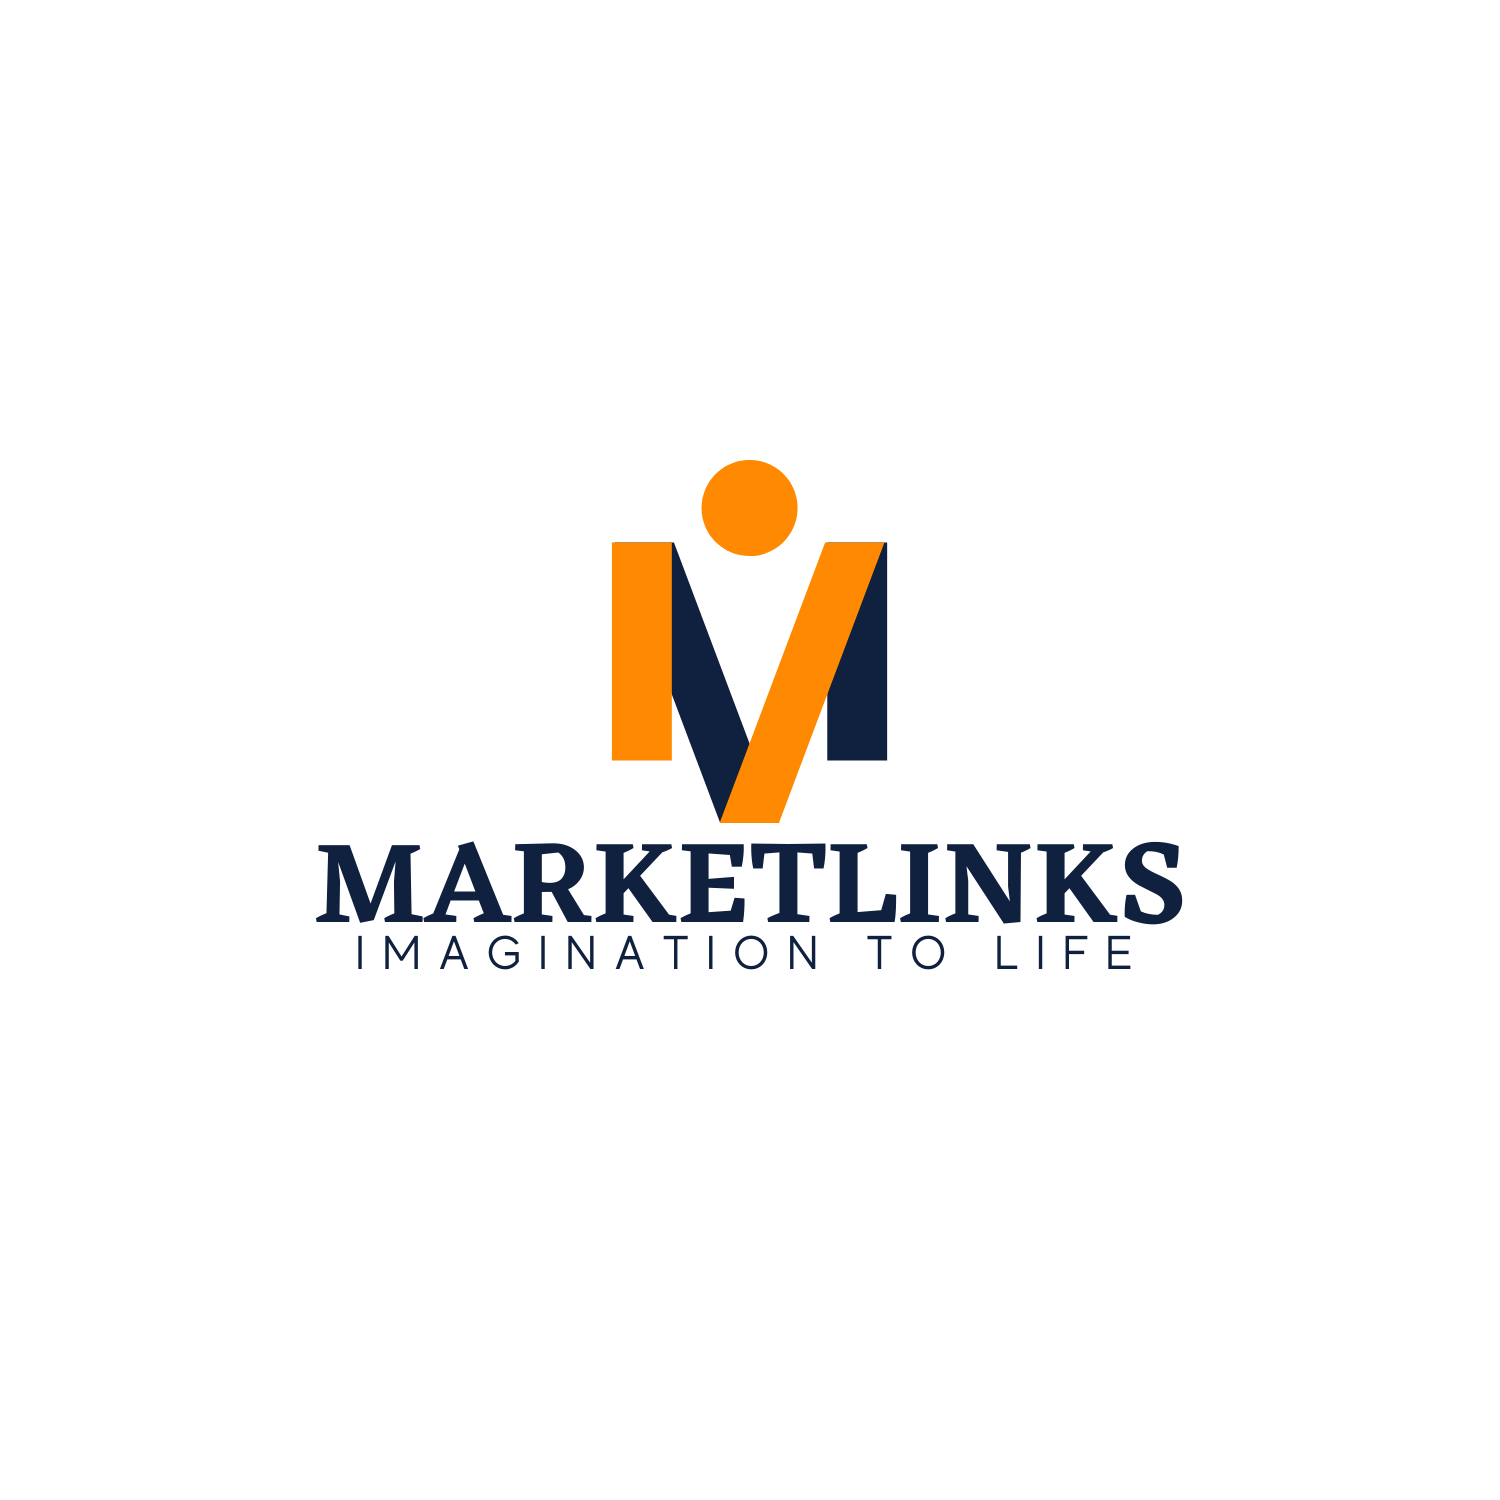 Online Marketing Agency Business Logo